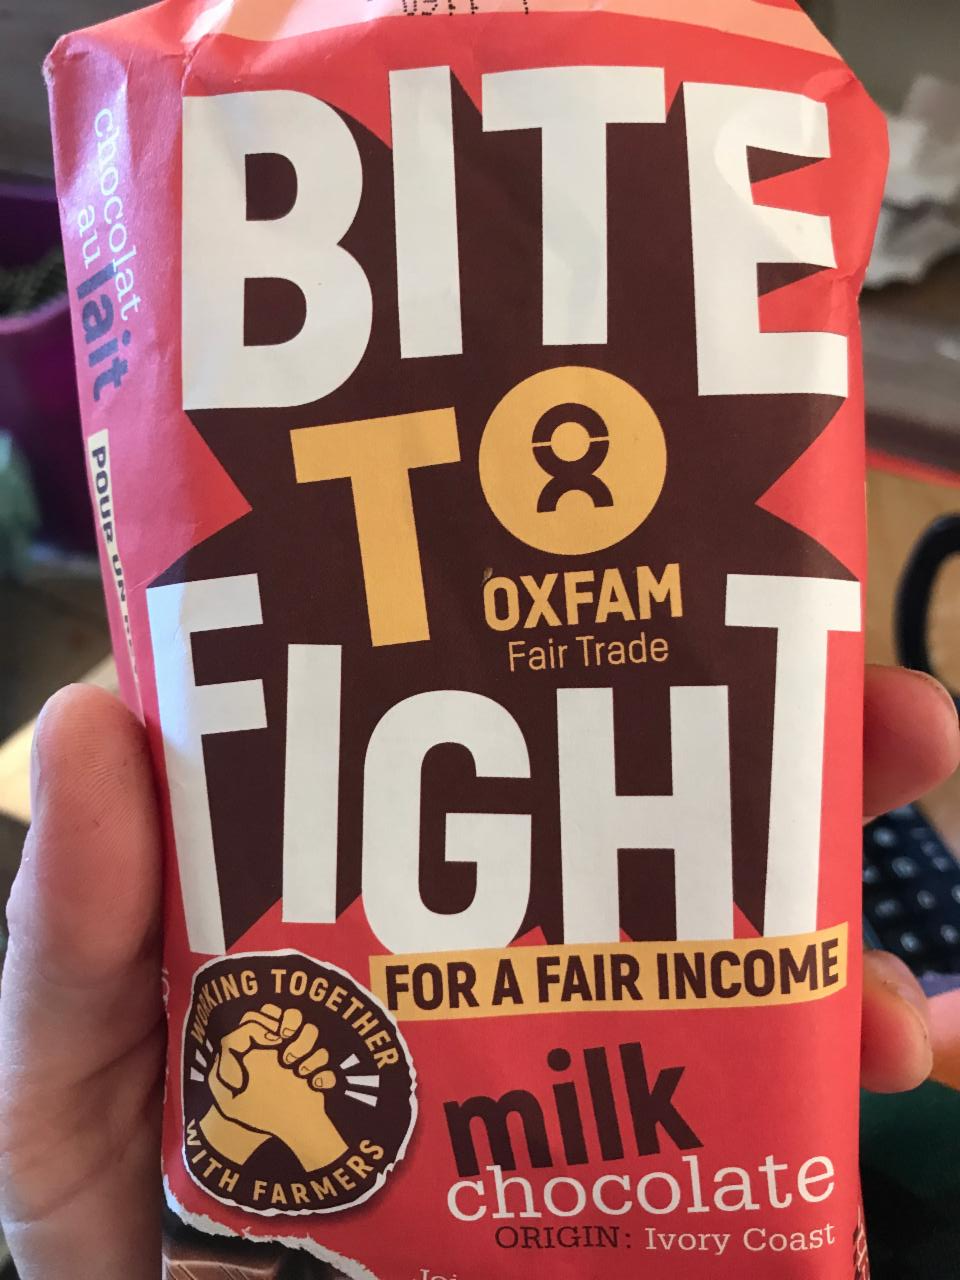 Fotografie - Bite to fight milk chocolate Oxfam